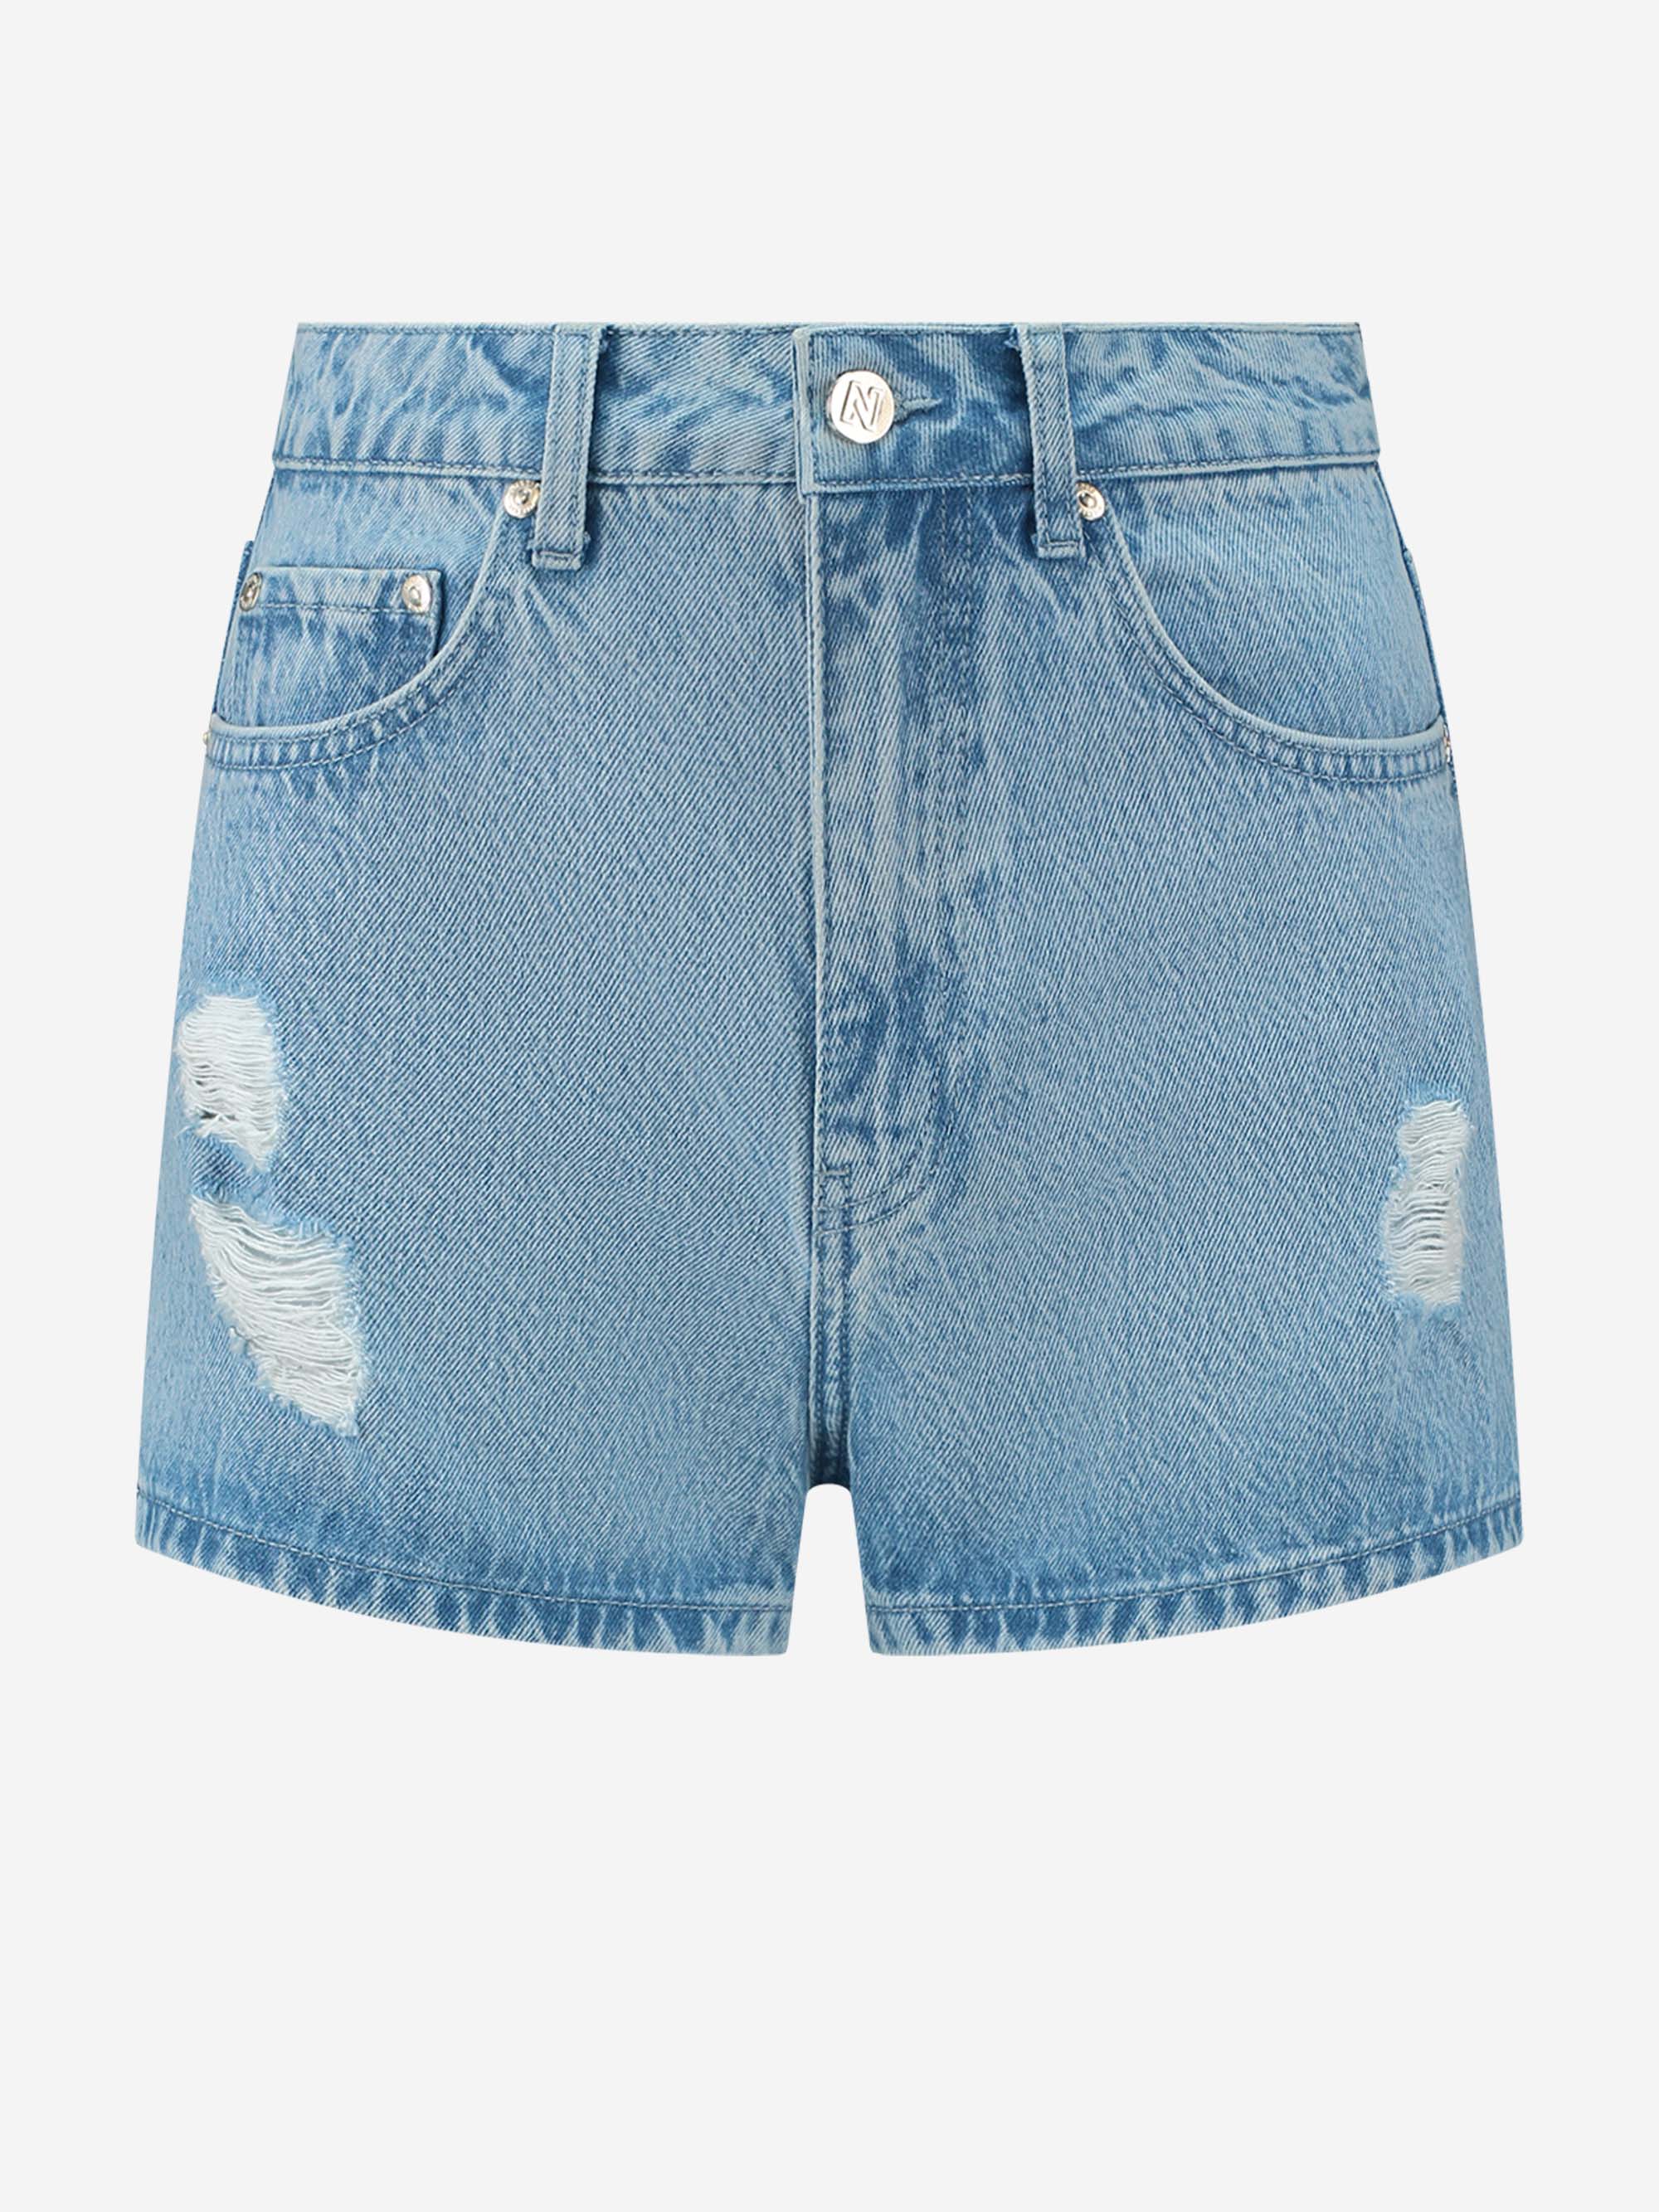 Chelsea Blue Denim Shorts